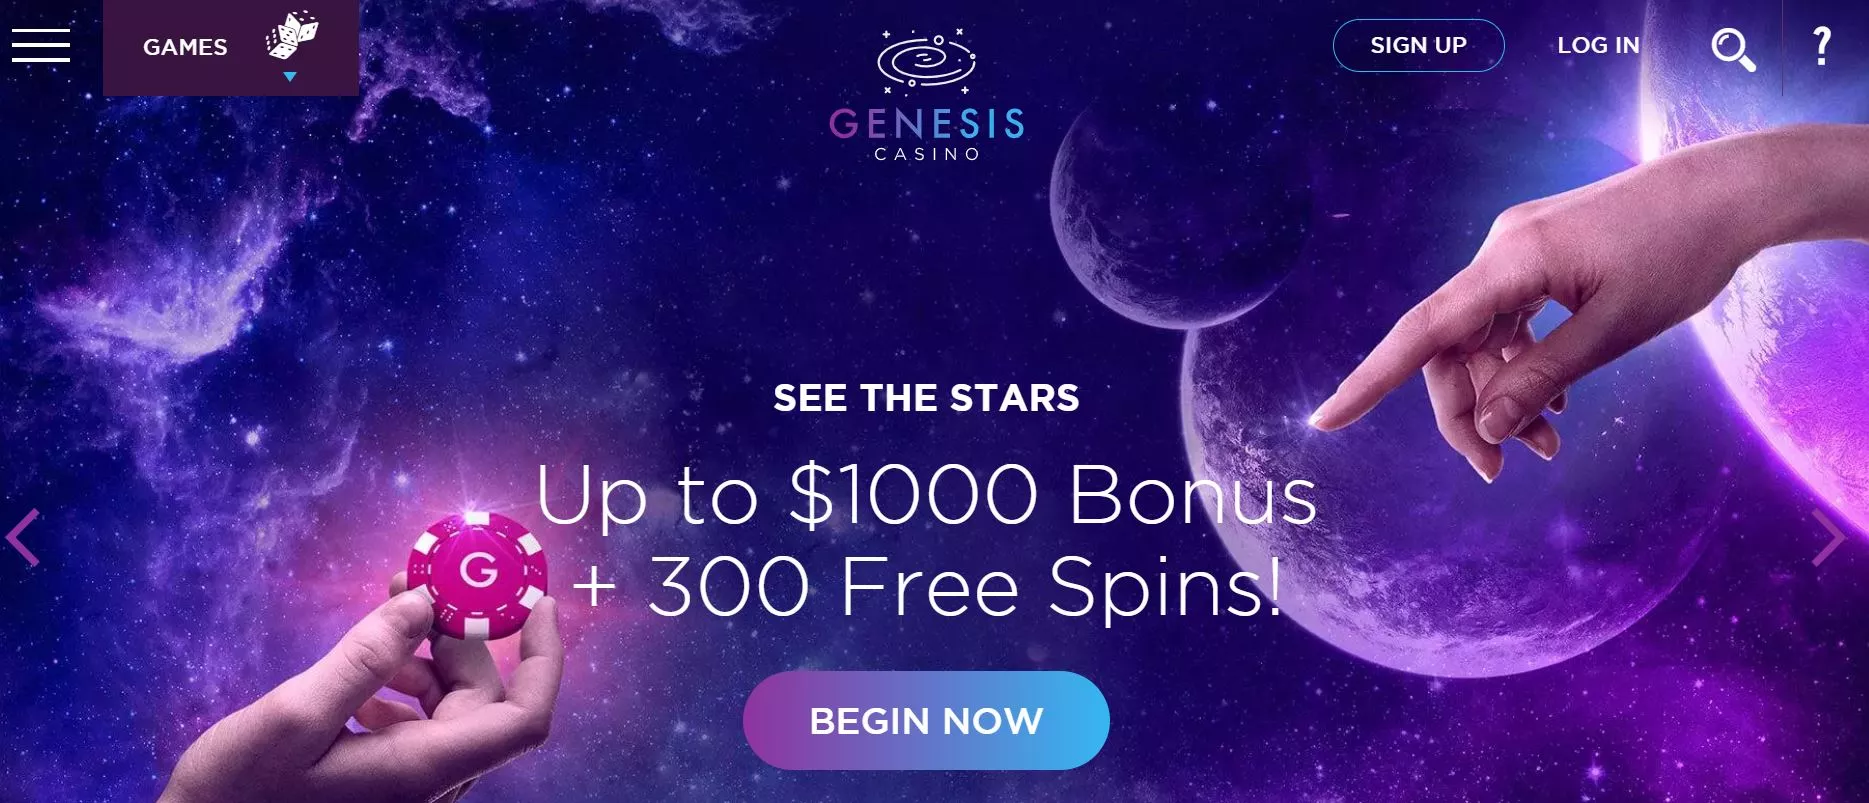 Genesis casino mobile app